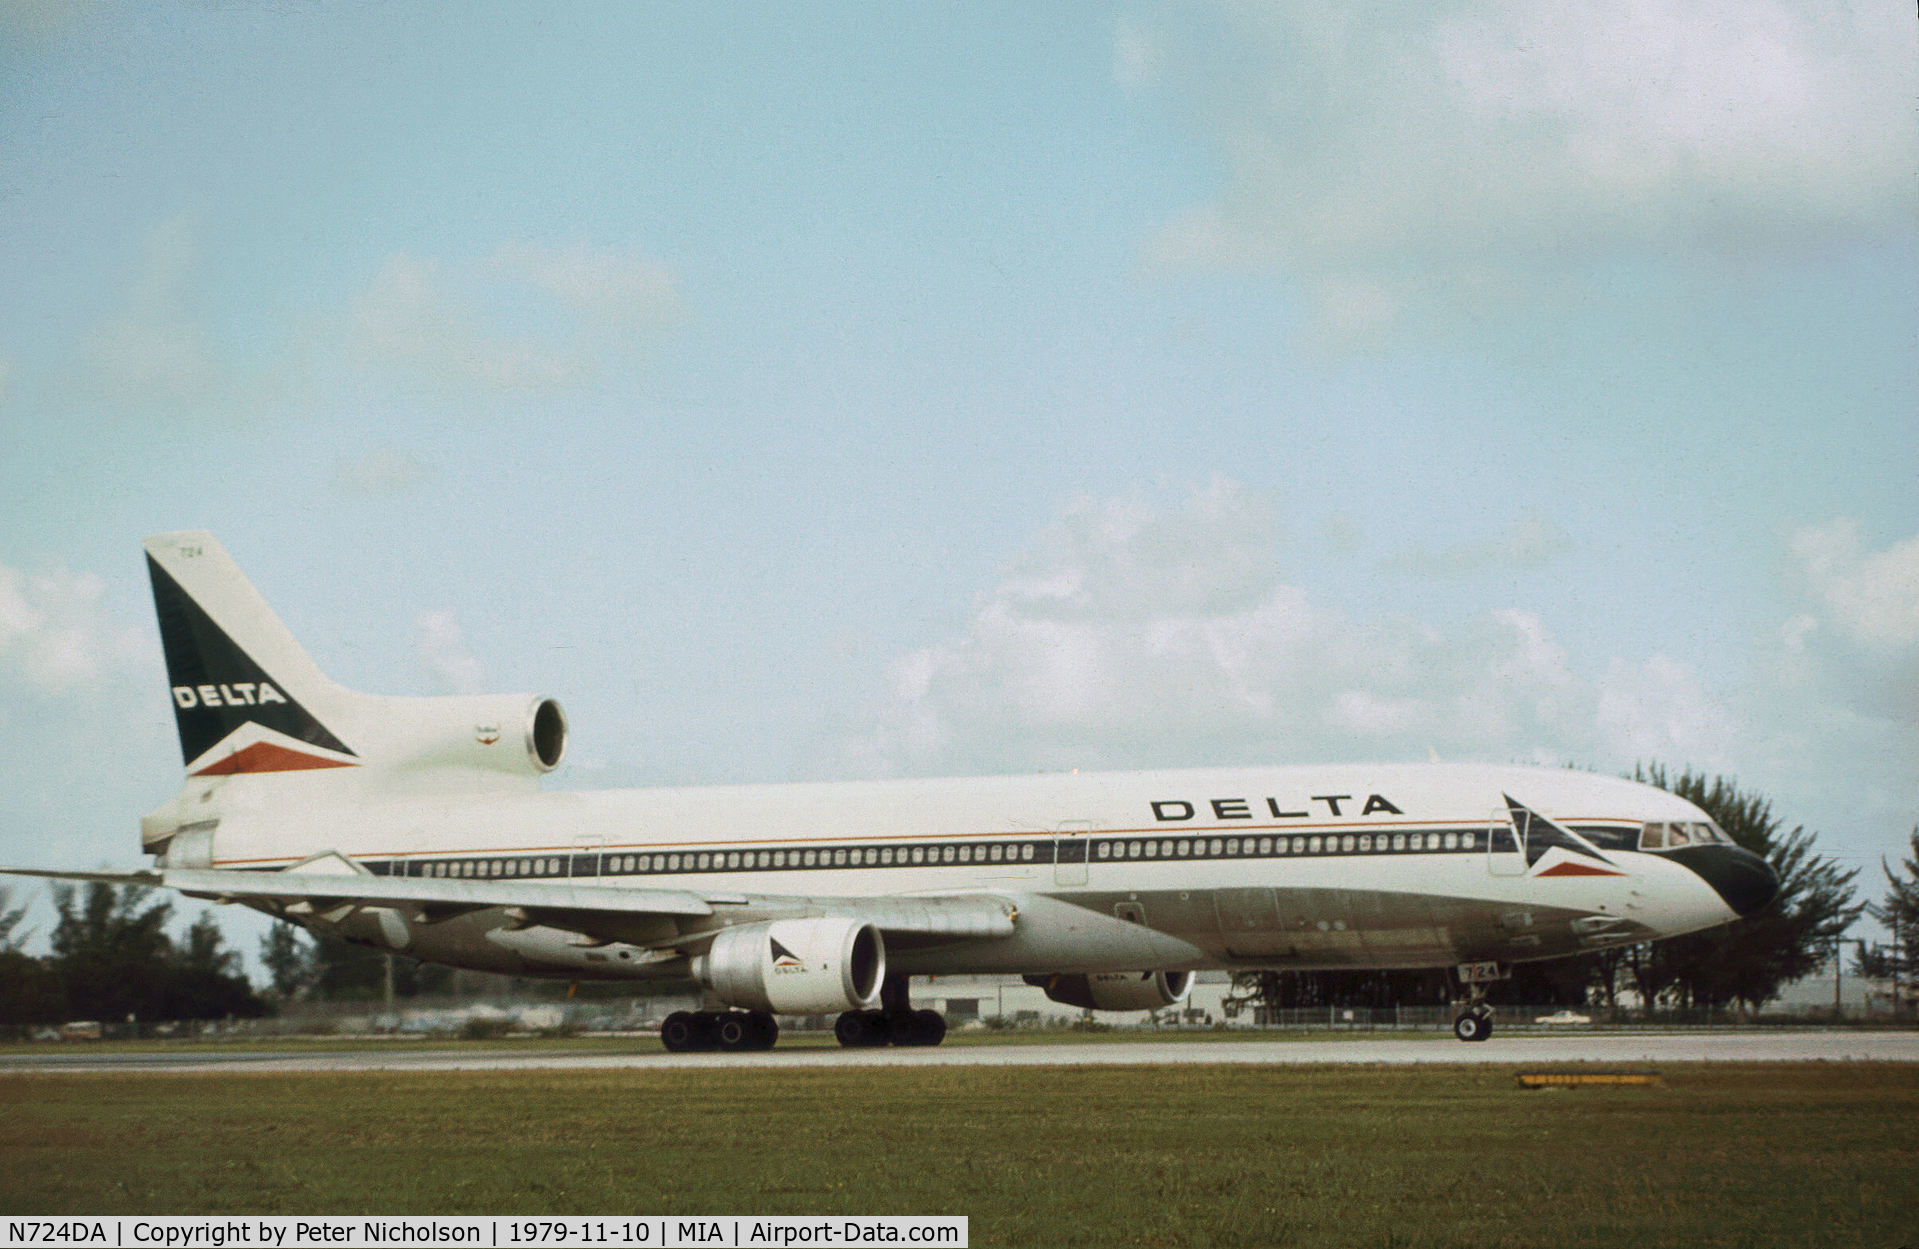 N724DA, 1978 Lockheed L-1011-385-1 TriStar 1 C/N 193C-1151, Lockheed TriStar of Delta Air Lines preparing for take-off at Miami in November 1979.